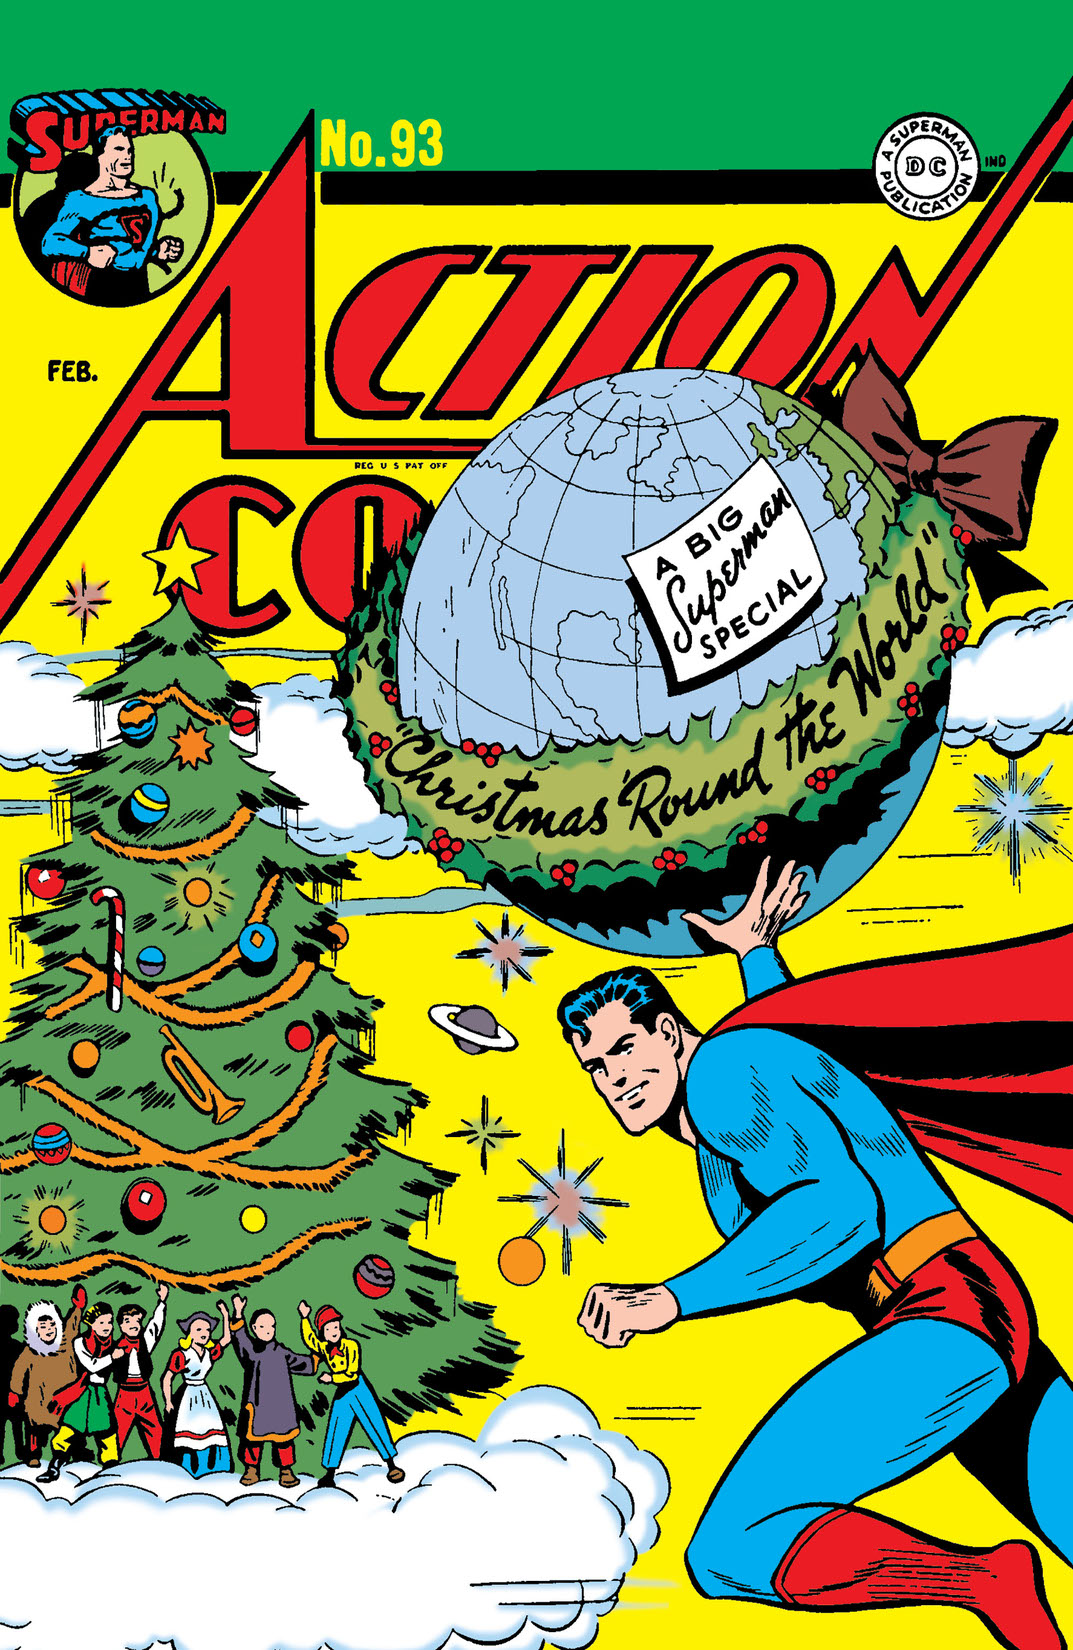 Action Comics (1938-) #93 preview images